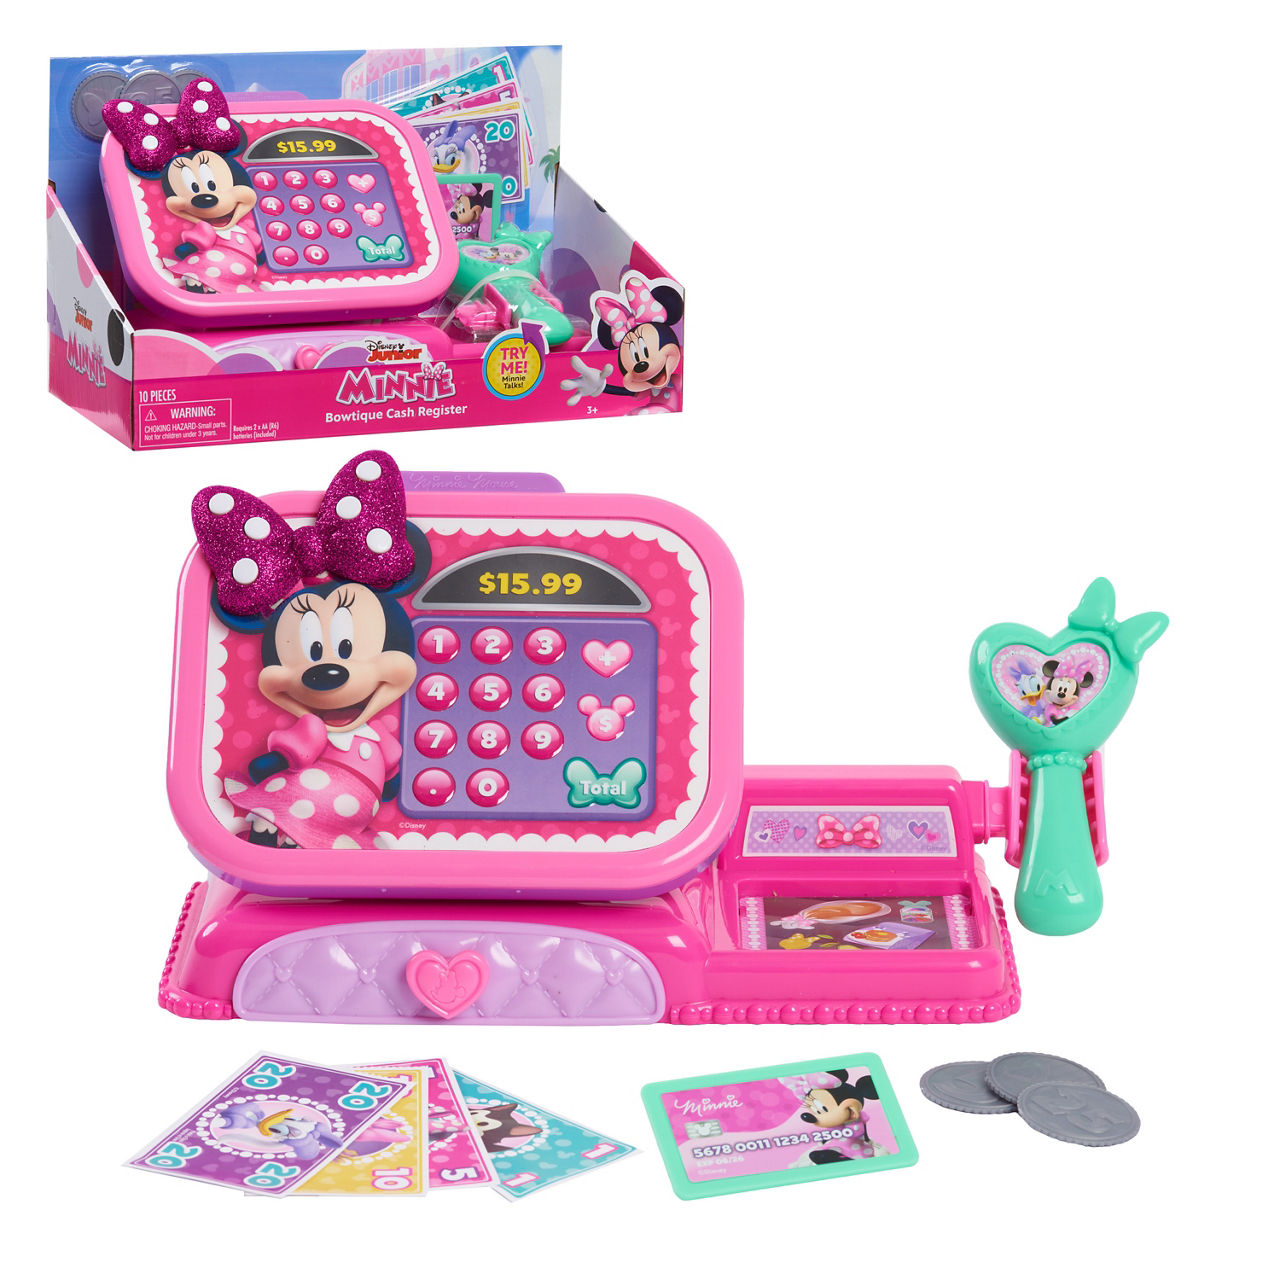 Minnie Mouse Disney Junior Pink Minnie Mouse Bowtique Register Play Set | Lots